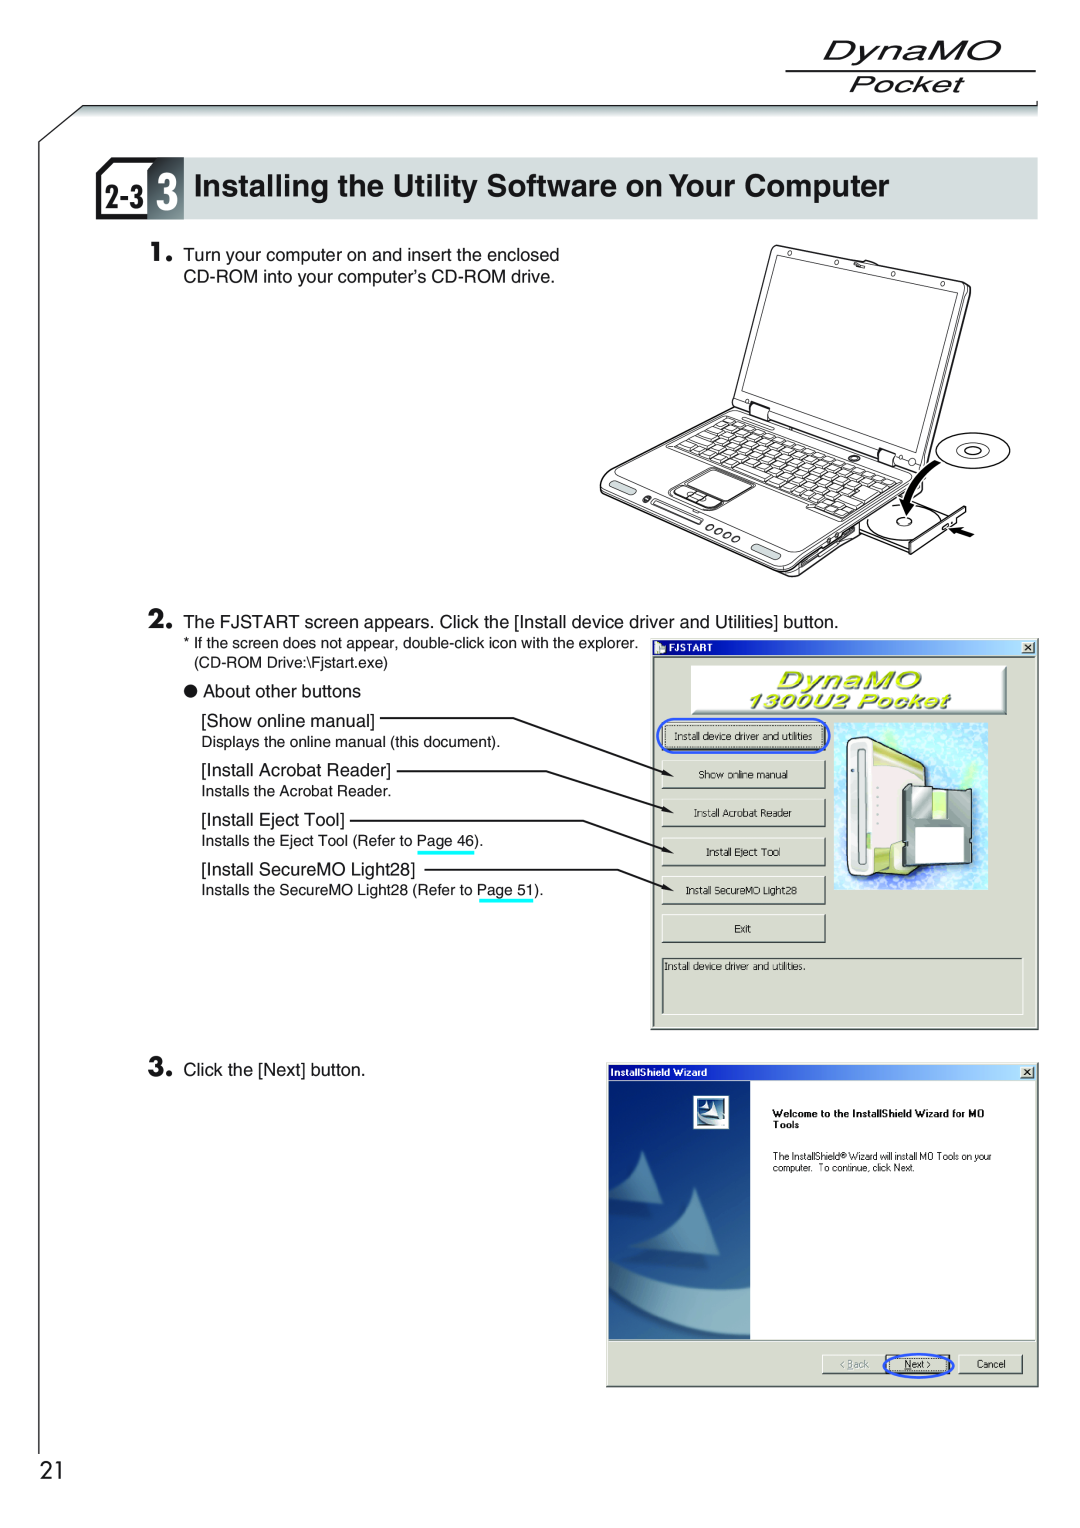 Fujitsu 1300U2 user manual 2-3 3 Installing the Utility Software on Your Computer 